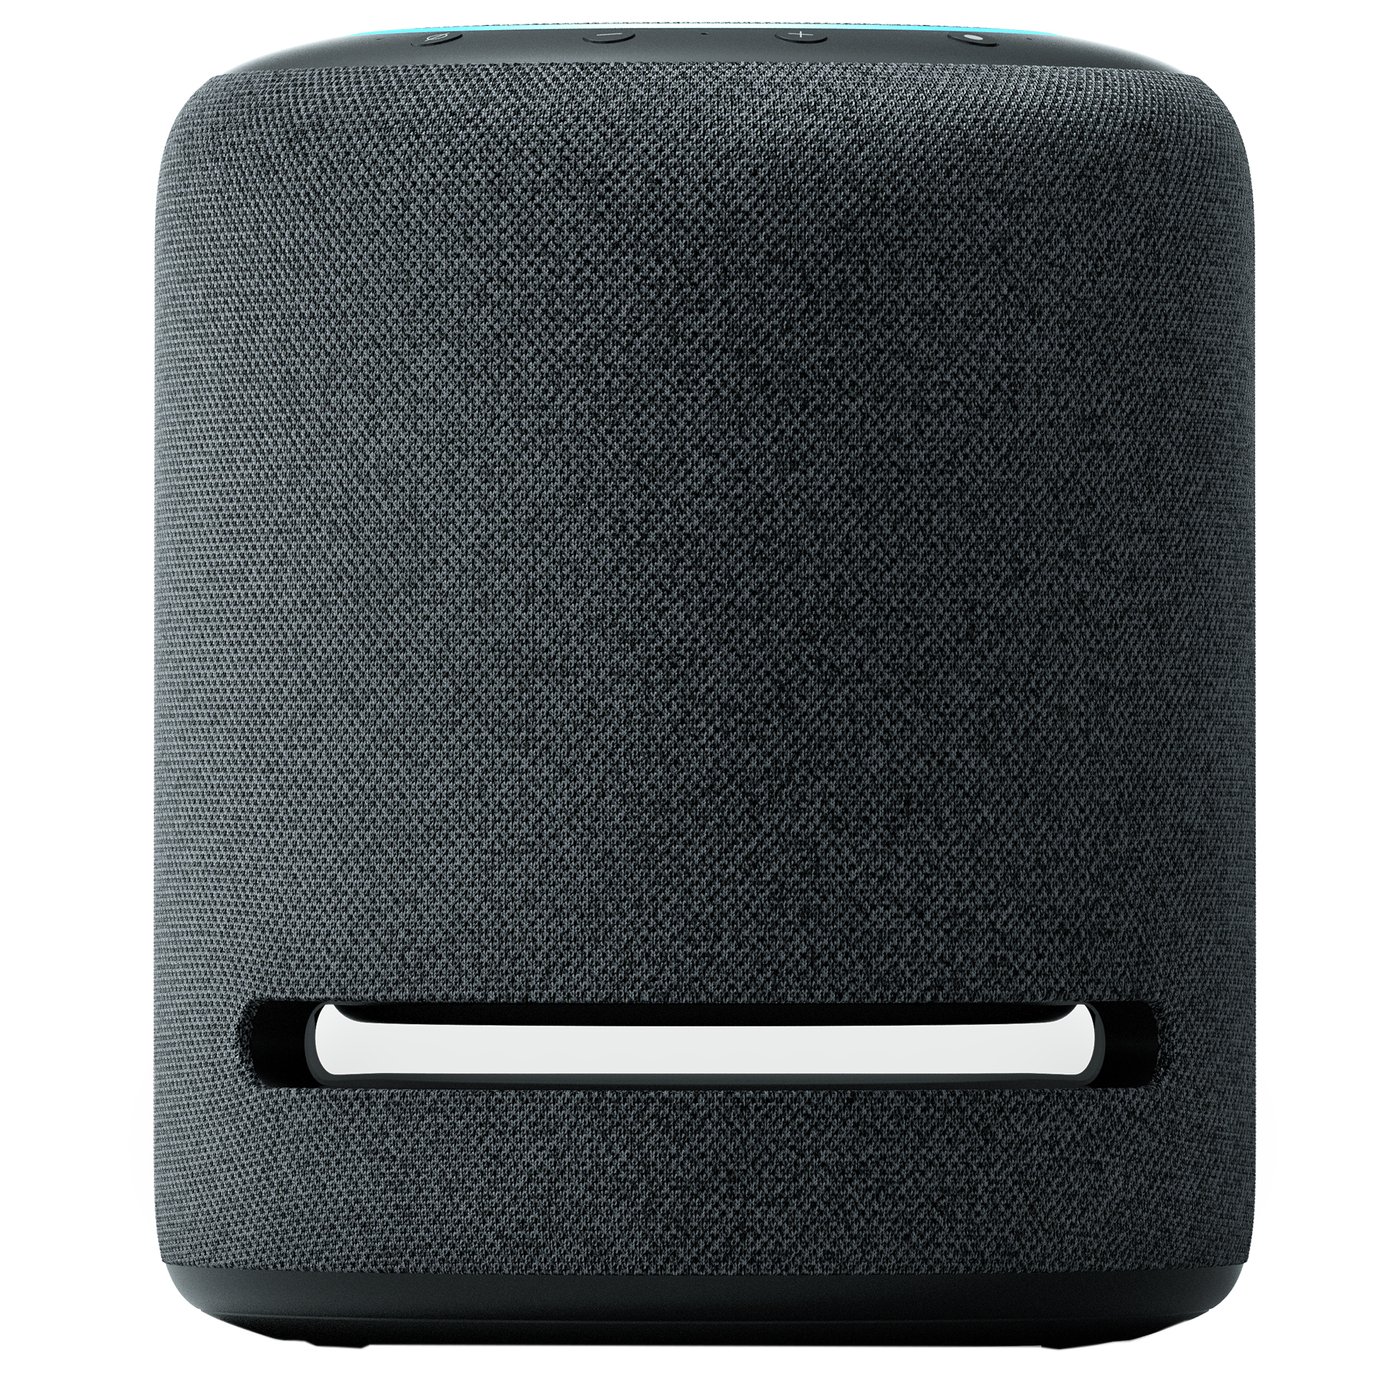 Buy Amazon Echo Studio Smart Speaker 